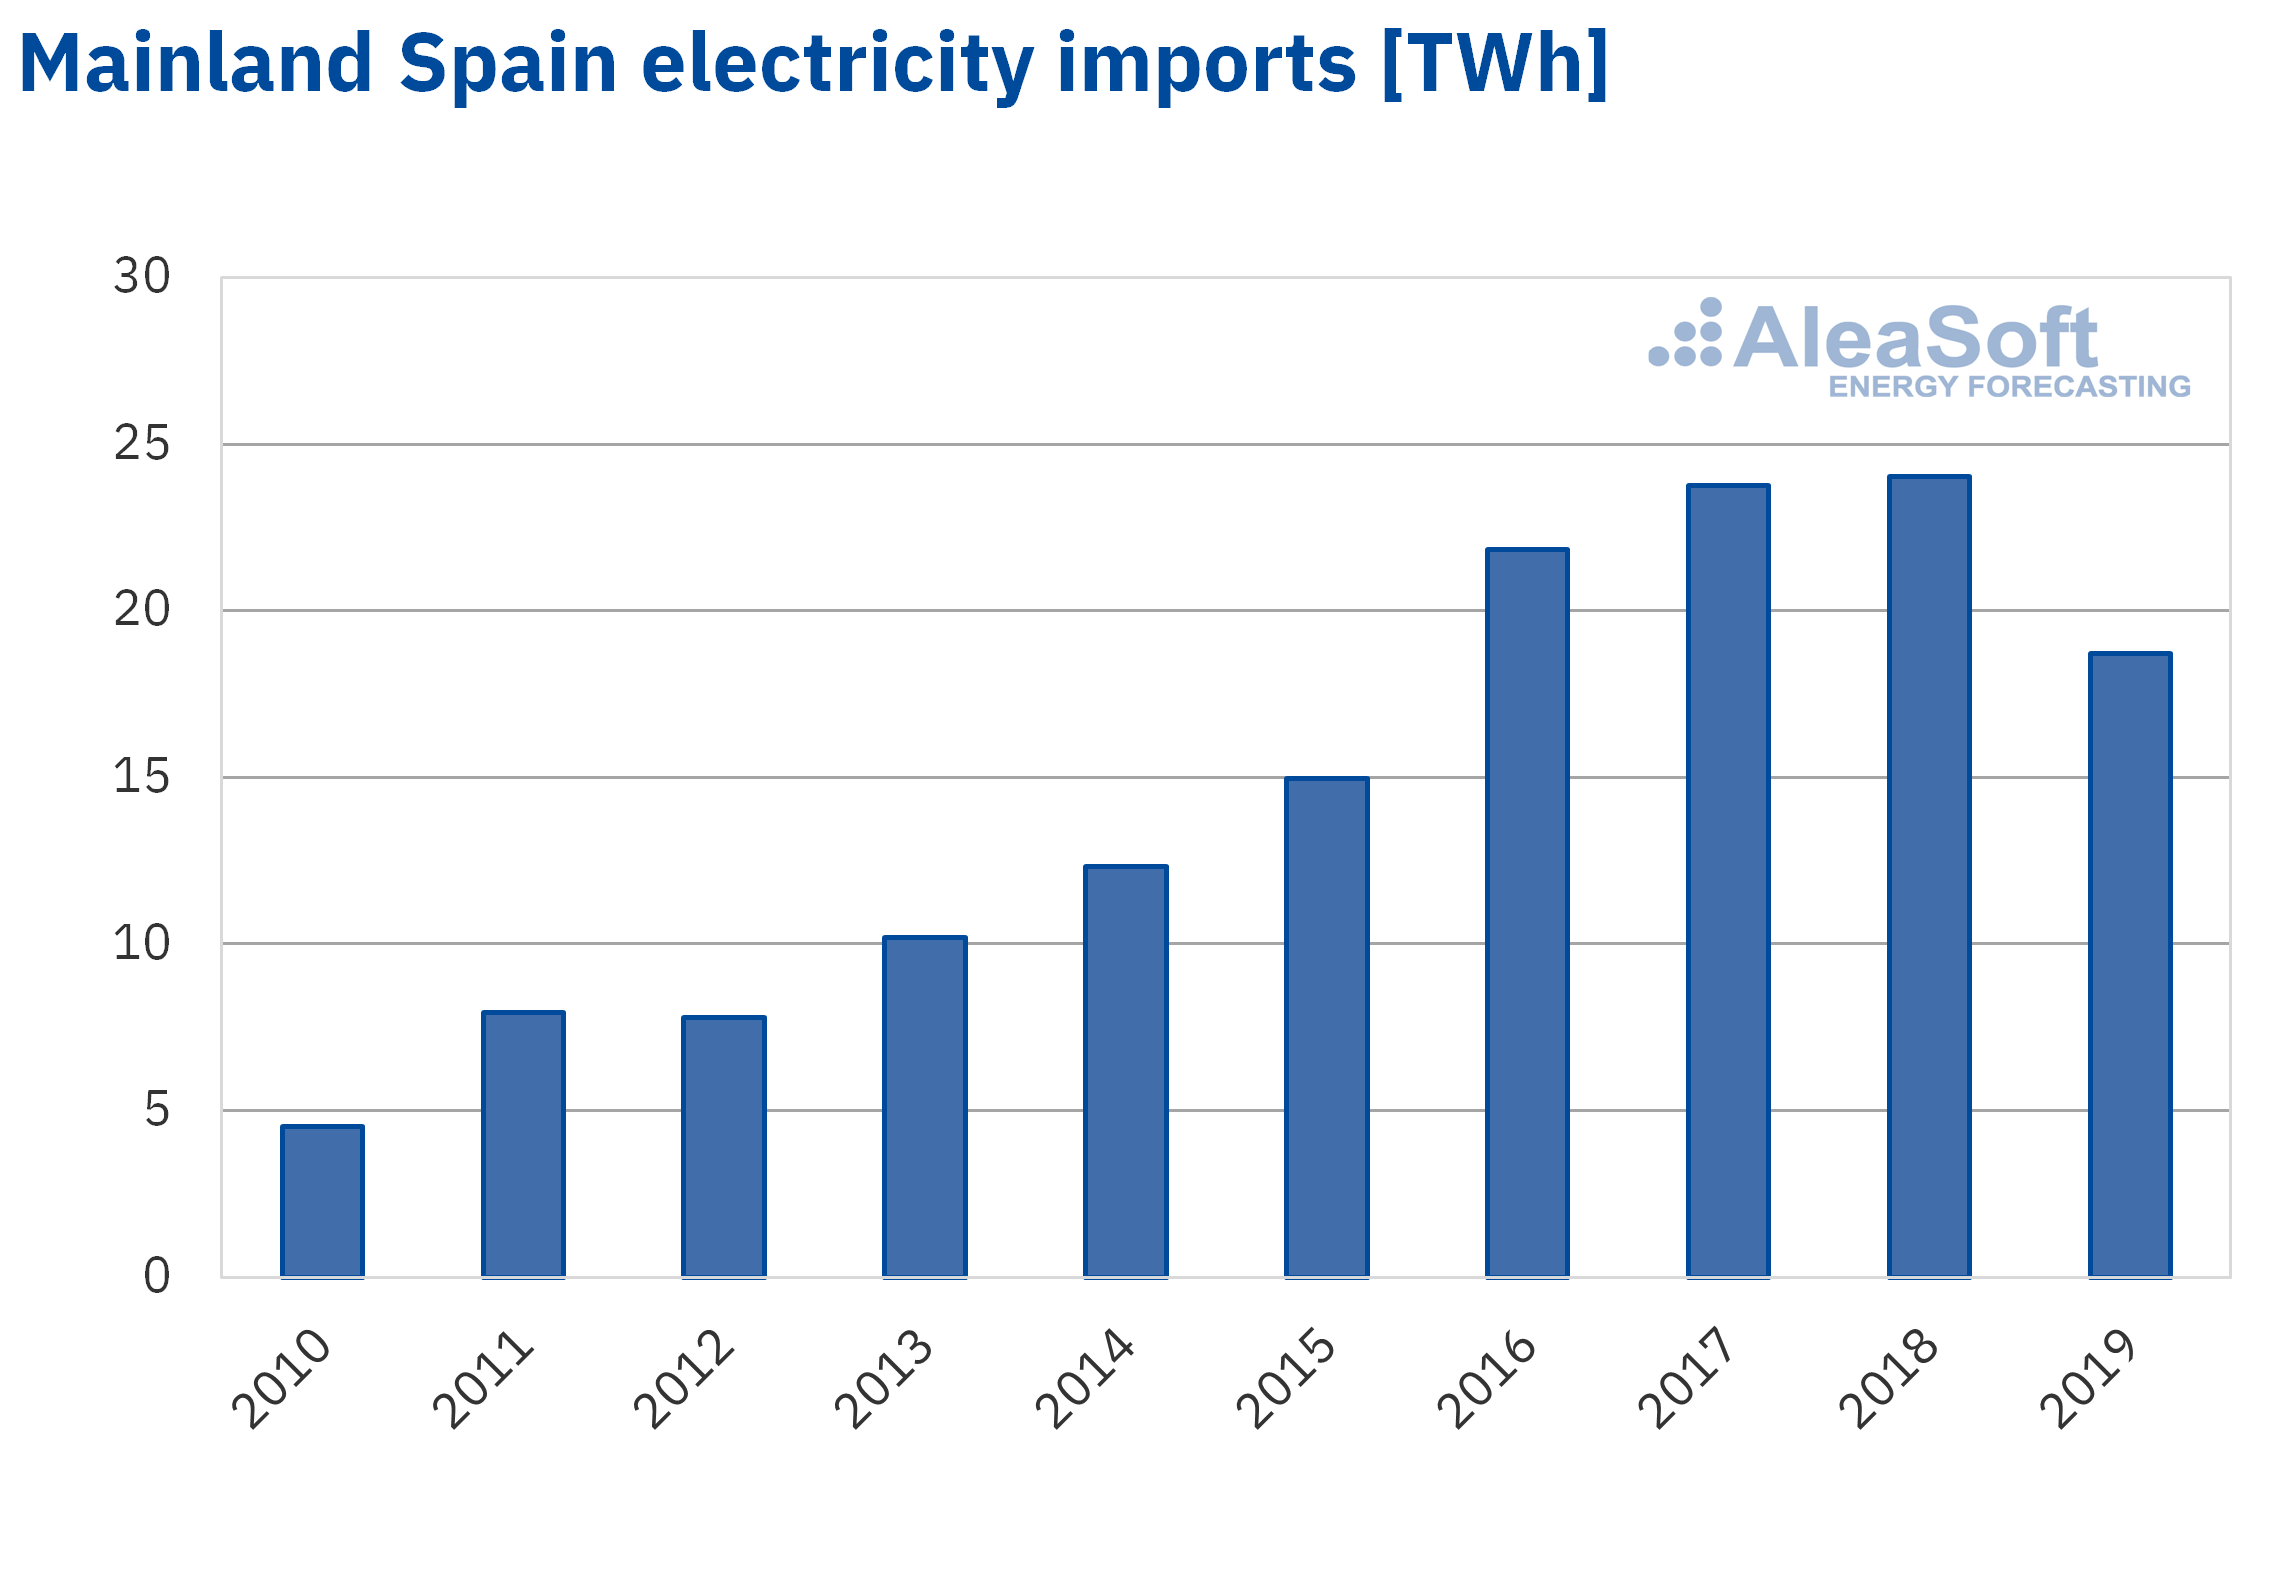 AleaSoft - mainland spain electricity imports